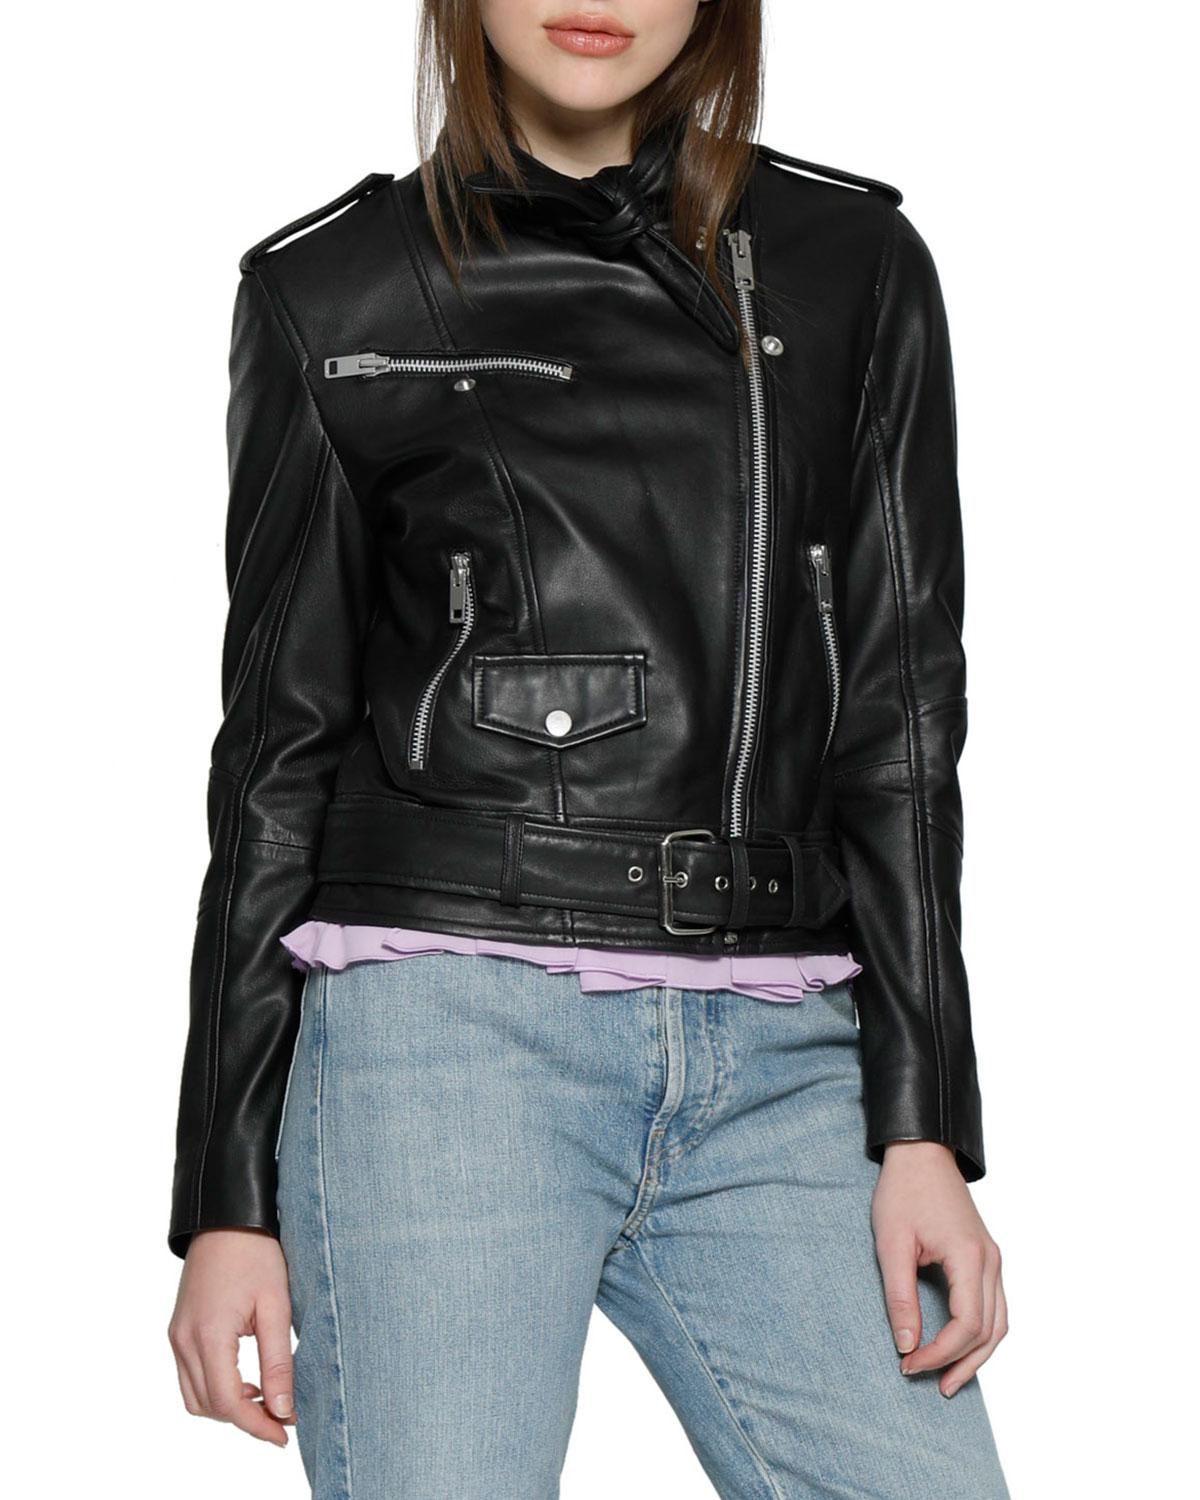 Walter Baker Christina Buckle Leather Moto Jacket in Black - Lyst